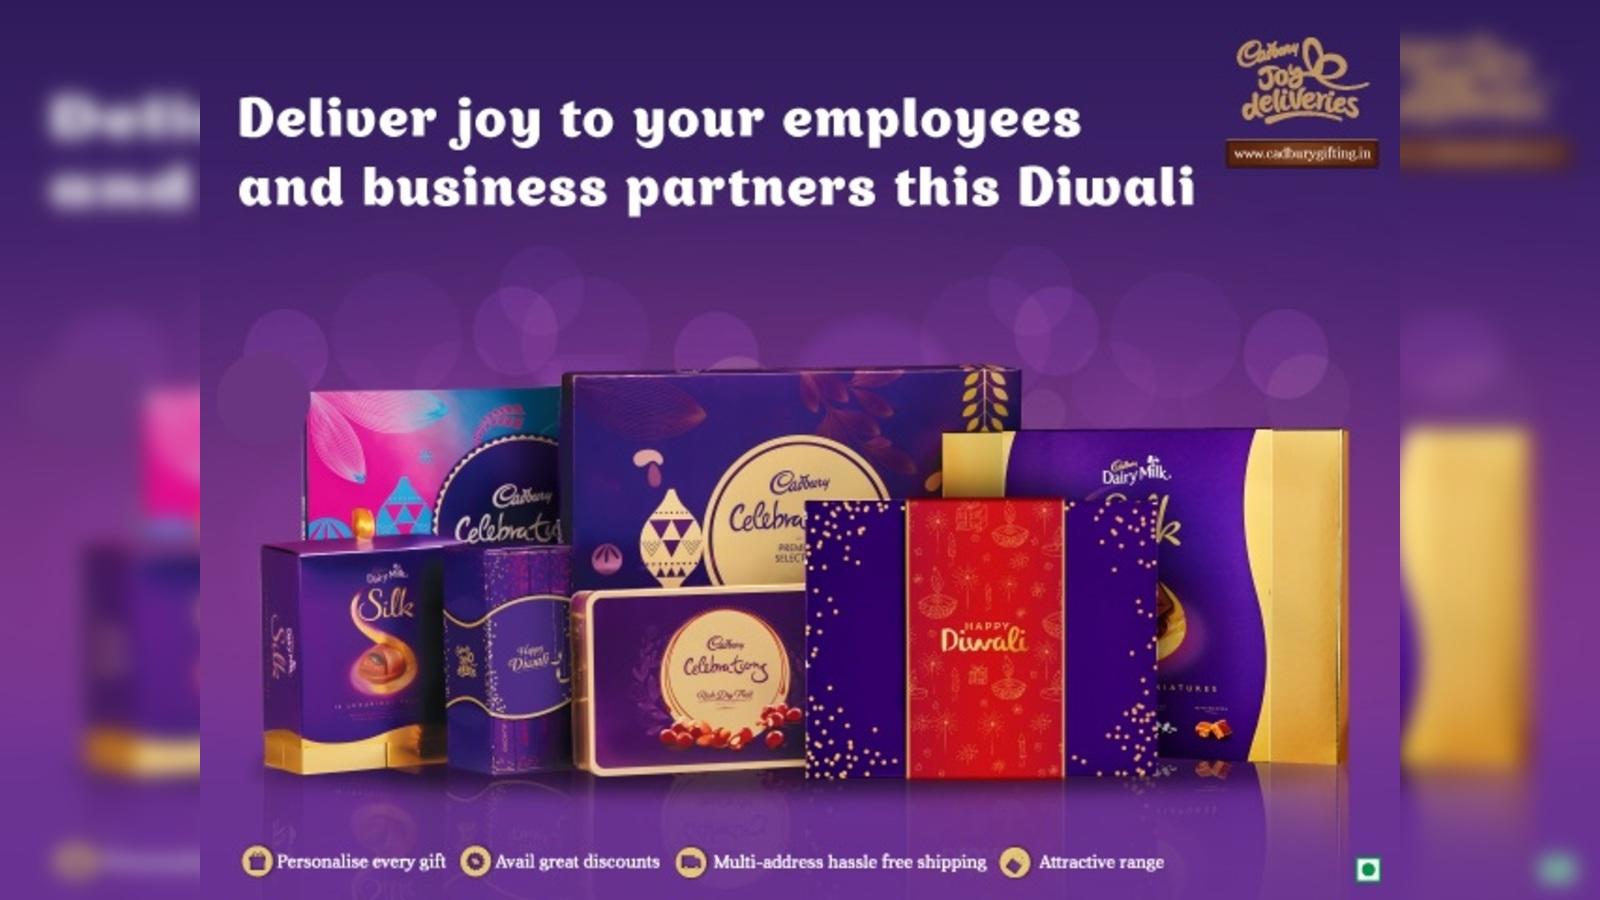 Mobile King - Diwali Dhamaka Sale at Mobile King! Assured Gift with all  Mobile Phones. 0% Interest and 0% Downpayment on all Vivo Phones.  #MobileKingJaipur, #Diwali, #Gifts, #Offer, #Discount, #VivoV17Pro,  #VivoS1, #Vivo, #